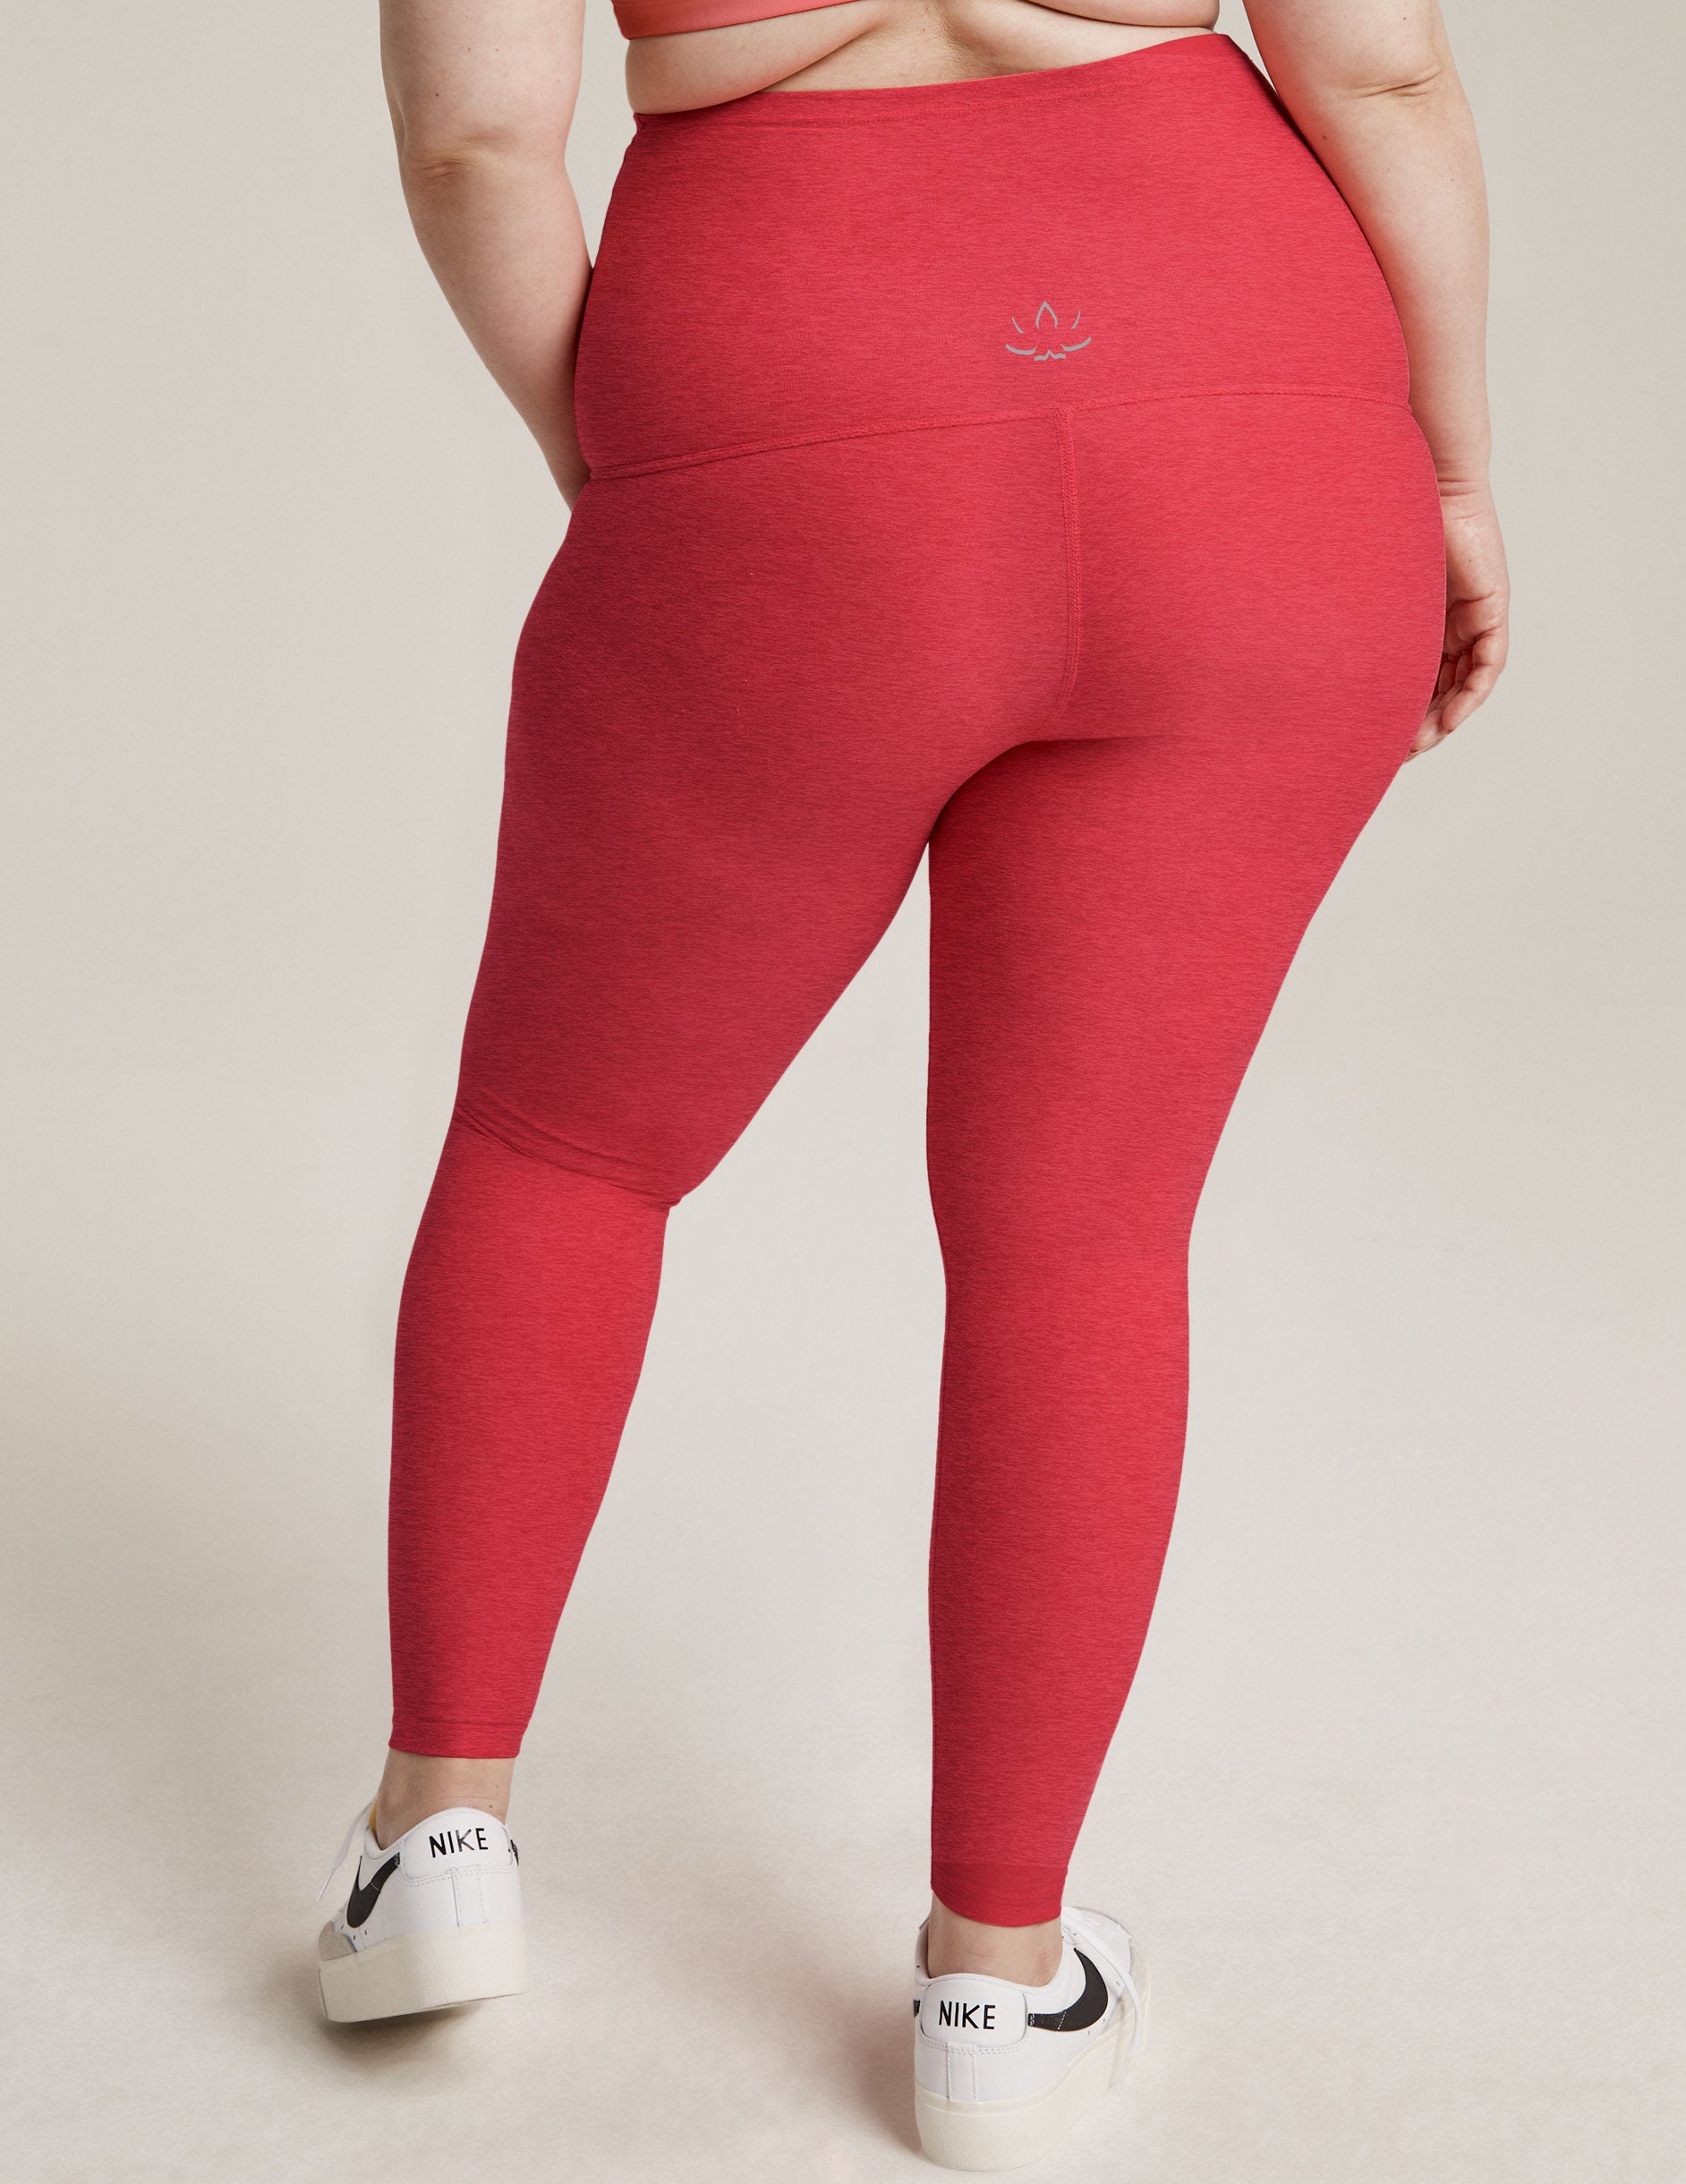 Popstar Mamacita Maternity Leggings - Red – Mums and Bumps